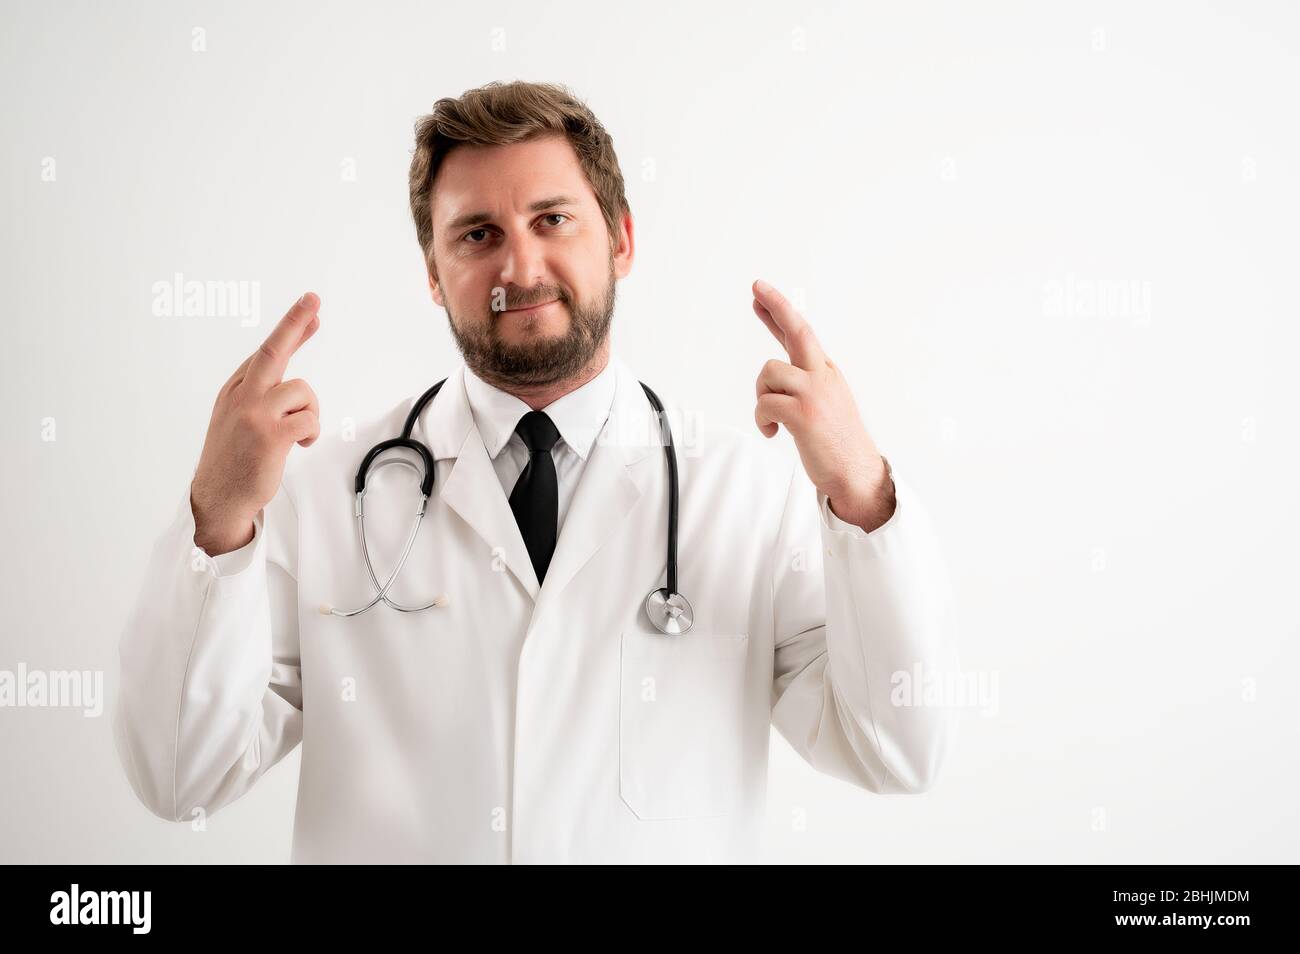 Retrato de un médico masculino con estetoscopio en uniforme médico mostrando doble buena suerte posando sobre un fondo blanco aislado Foto de stock